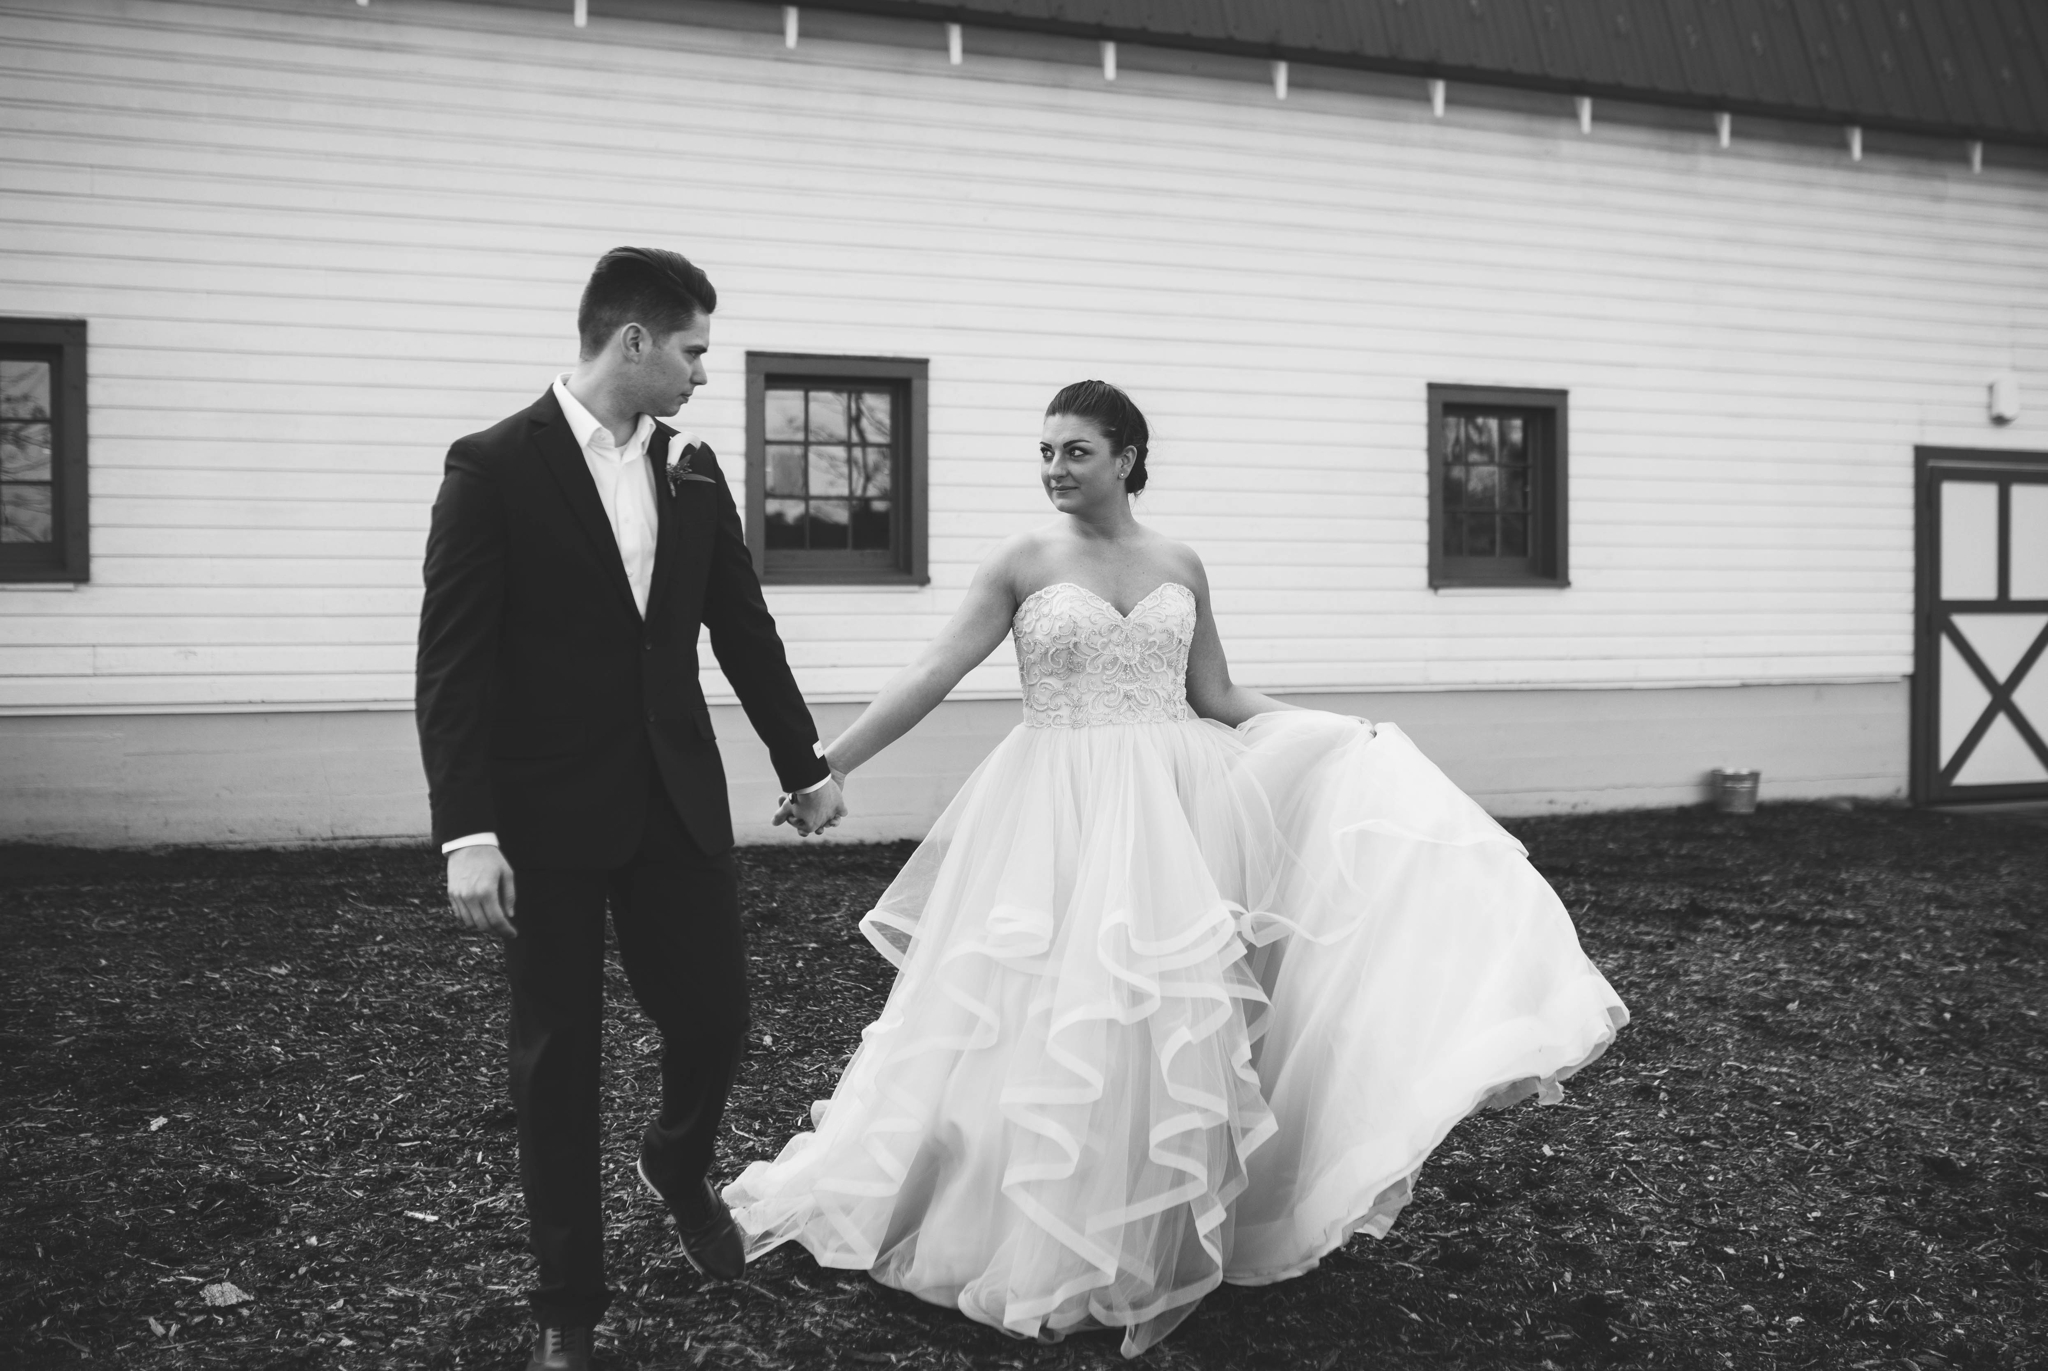 Wedding at Winmock at Kinderton in Bermuda Run, NC - Winston-Salem Wedding Photographer